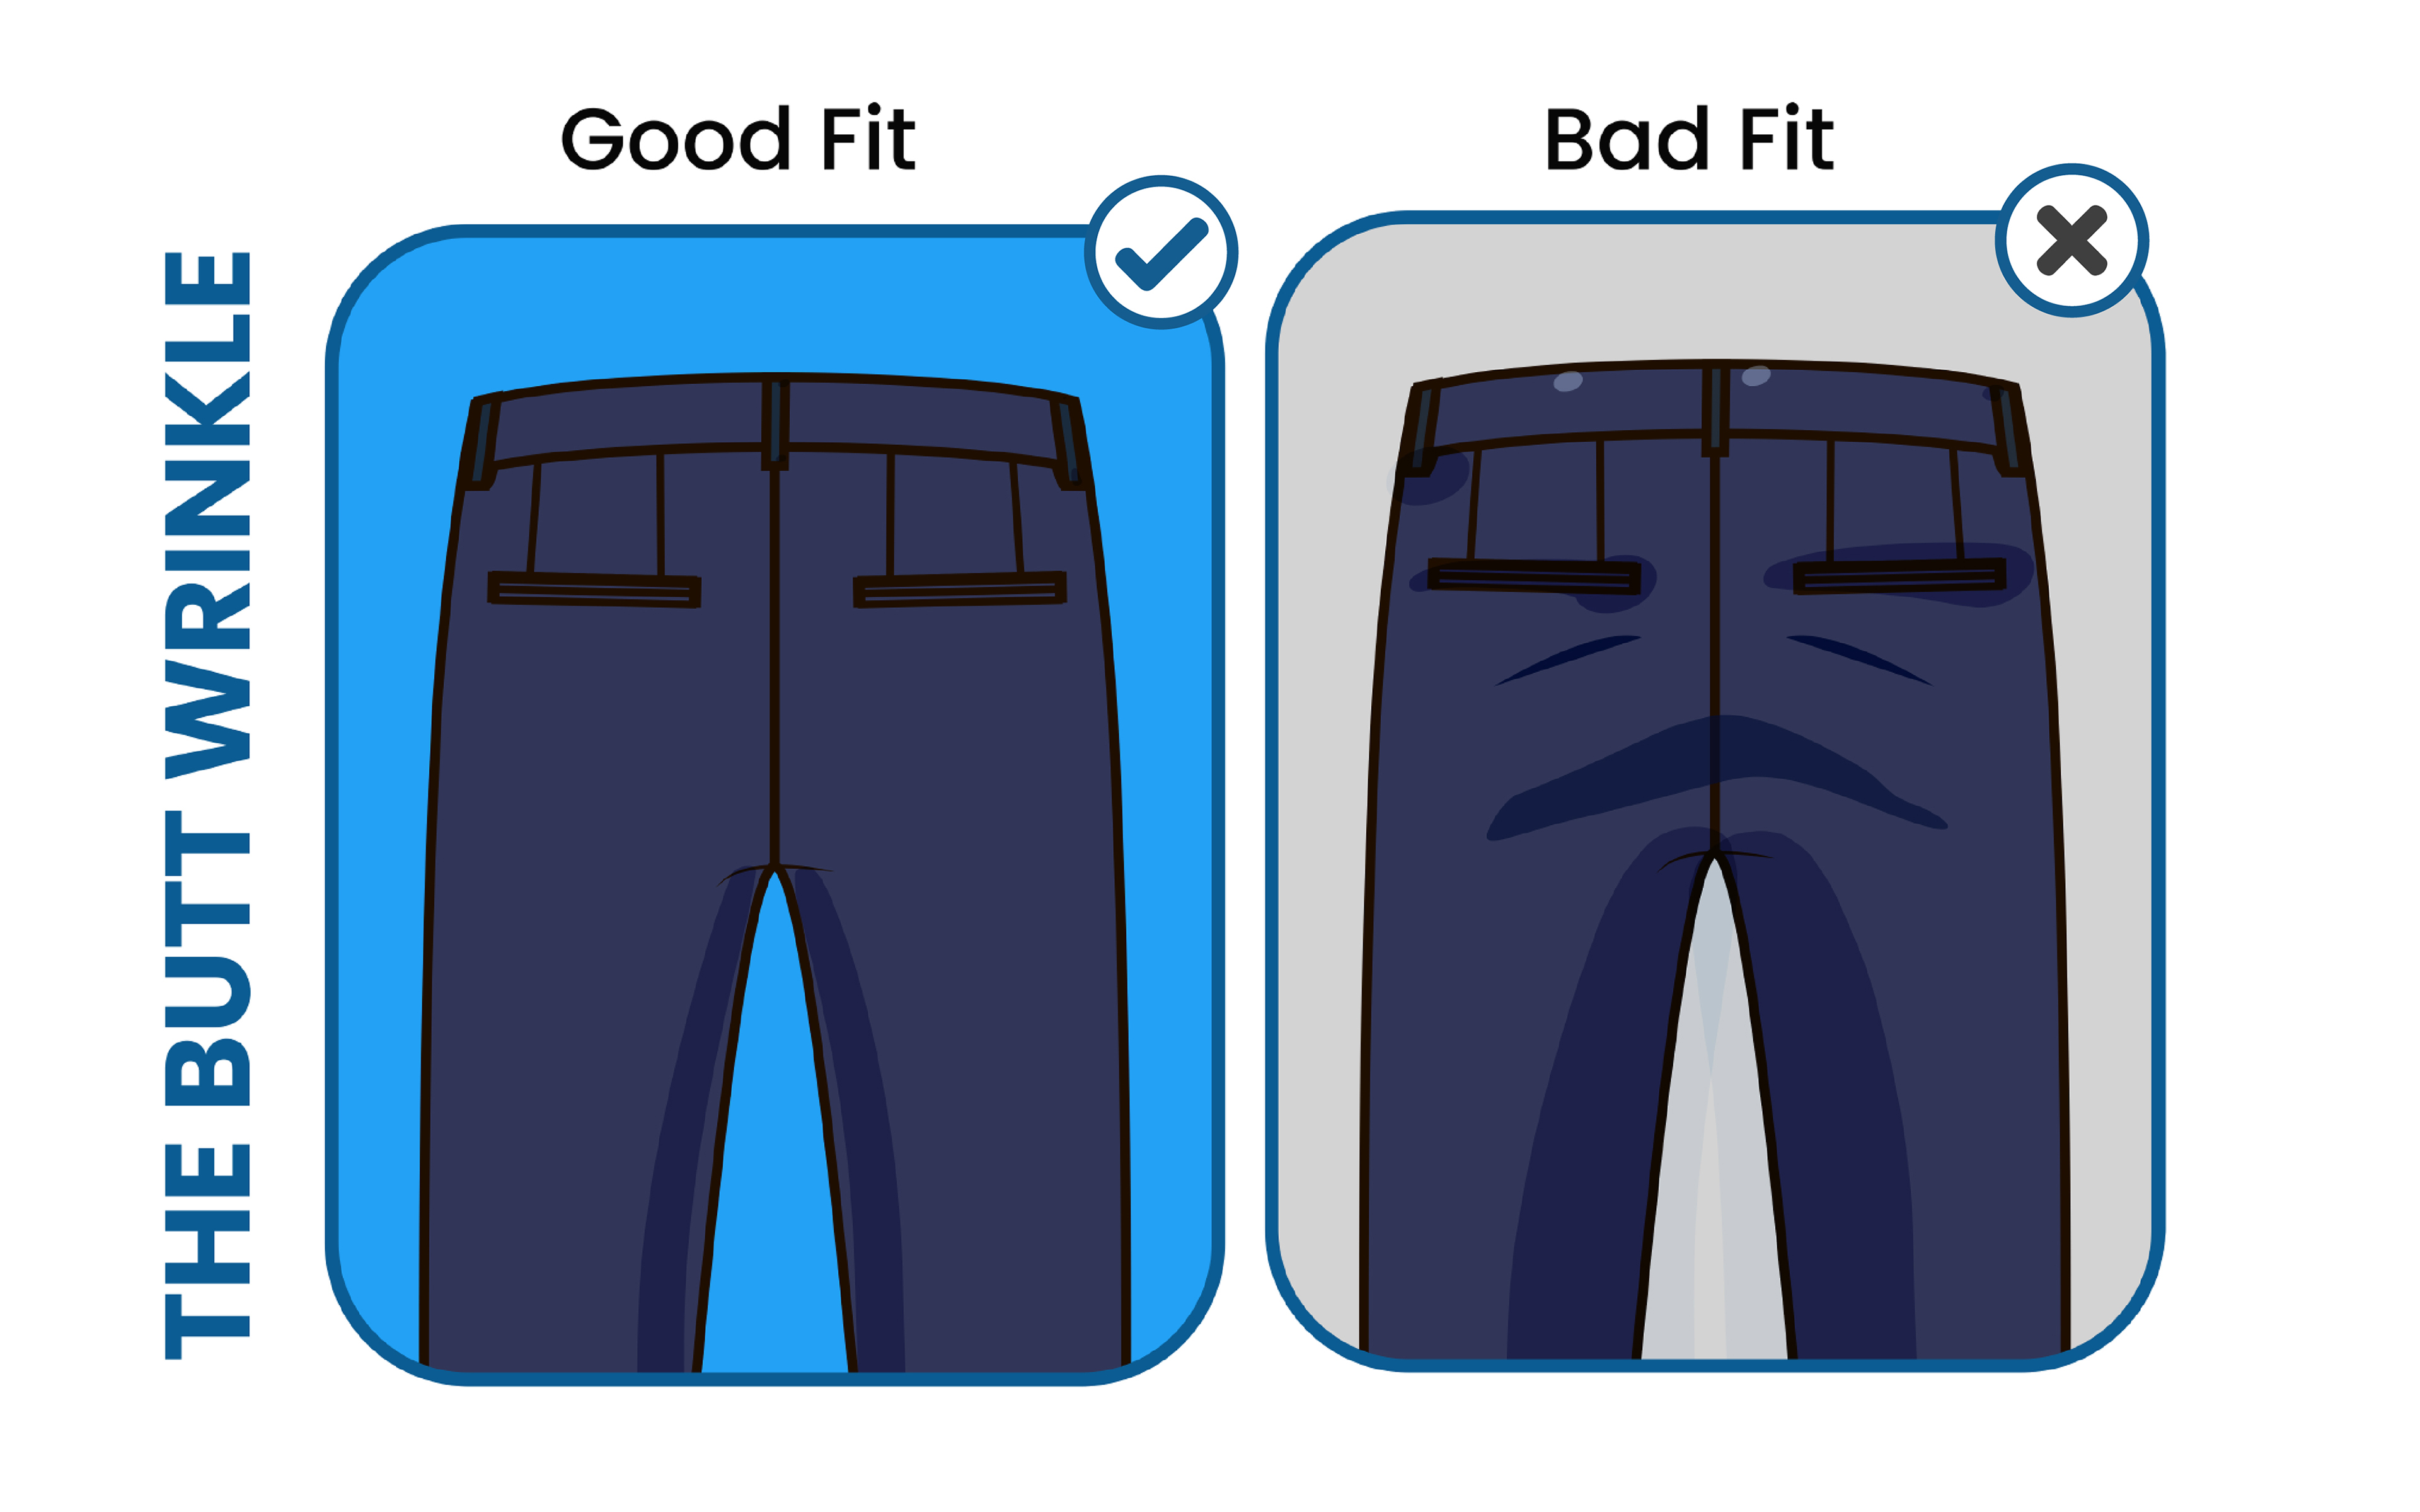 The DIY Tailor: How to Hem Dress Pants Like a Pro - ManMadeDIY